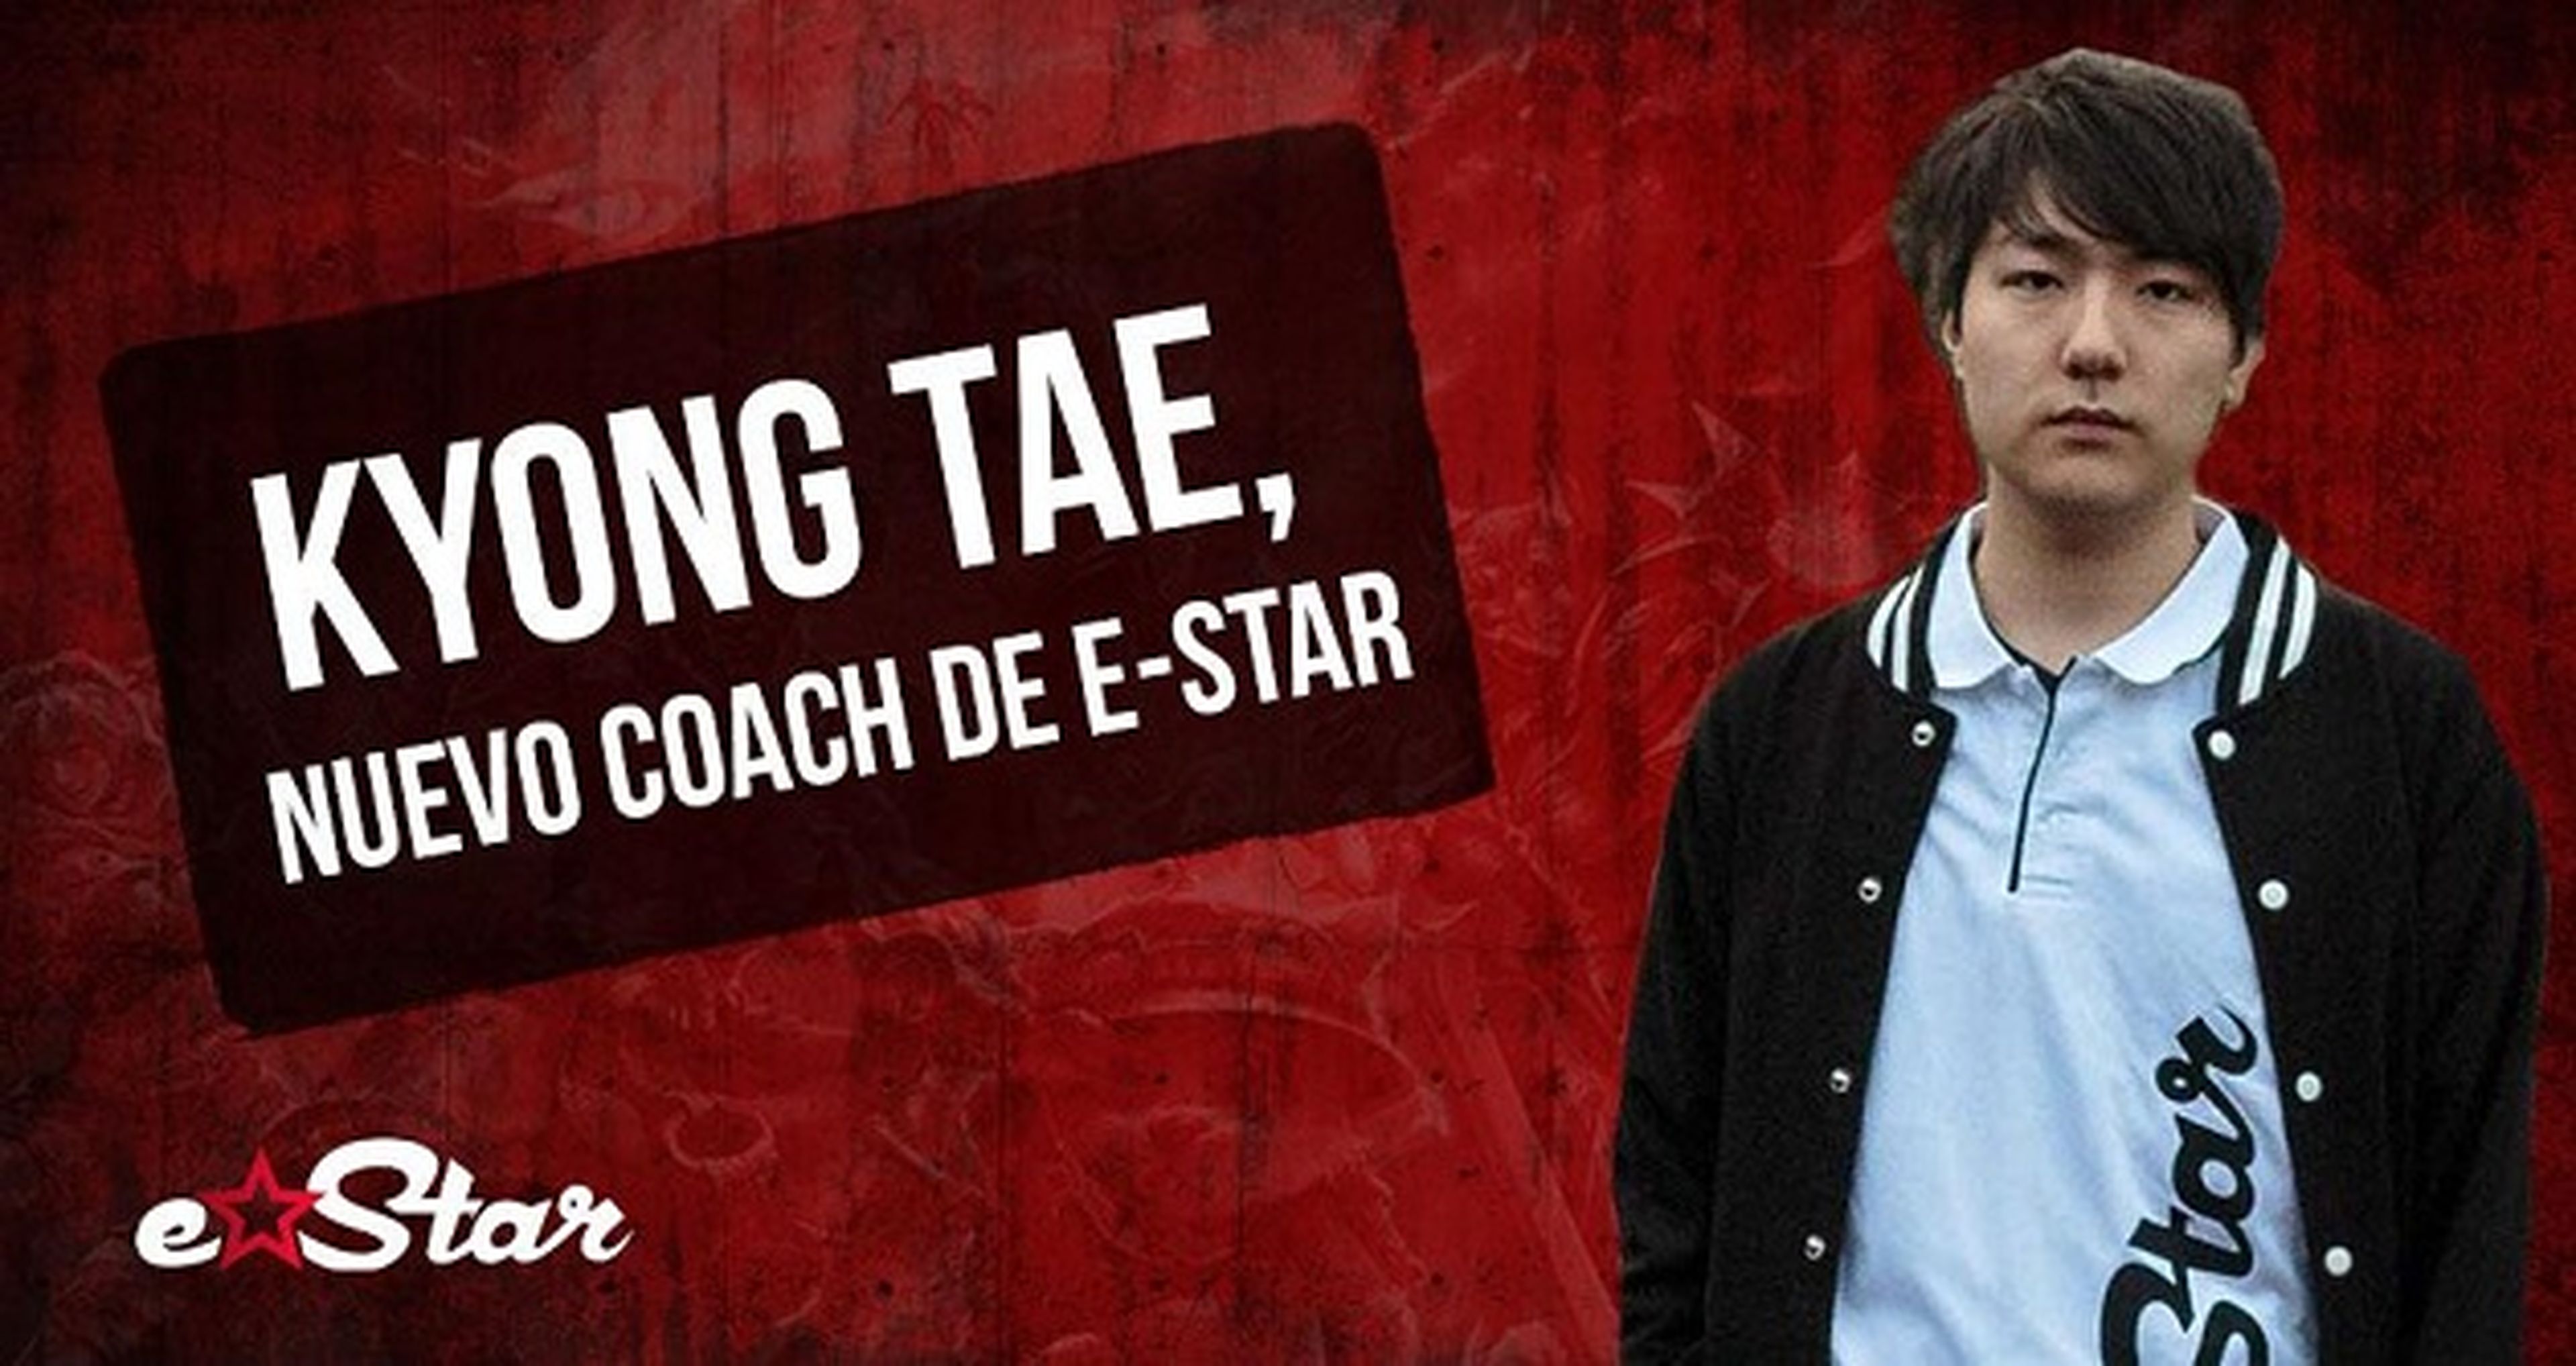 El equipo de League of Legends de eStar ficha a un entrenador coreano